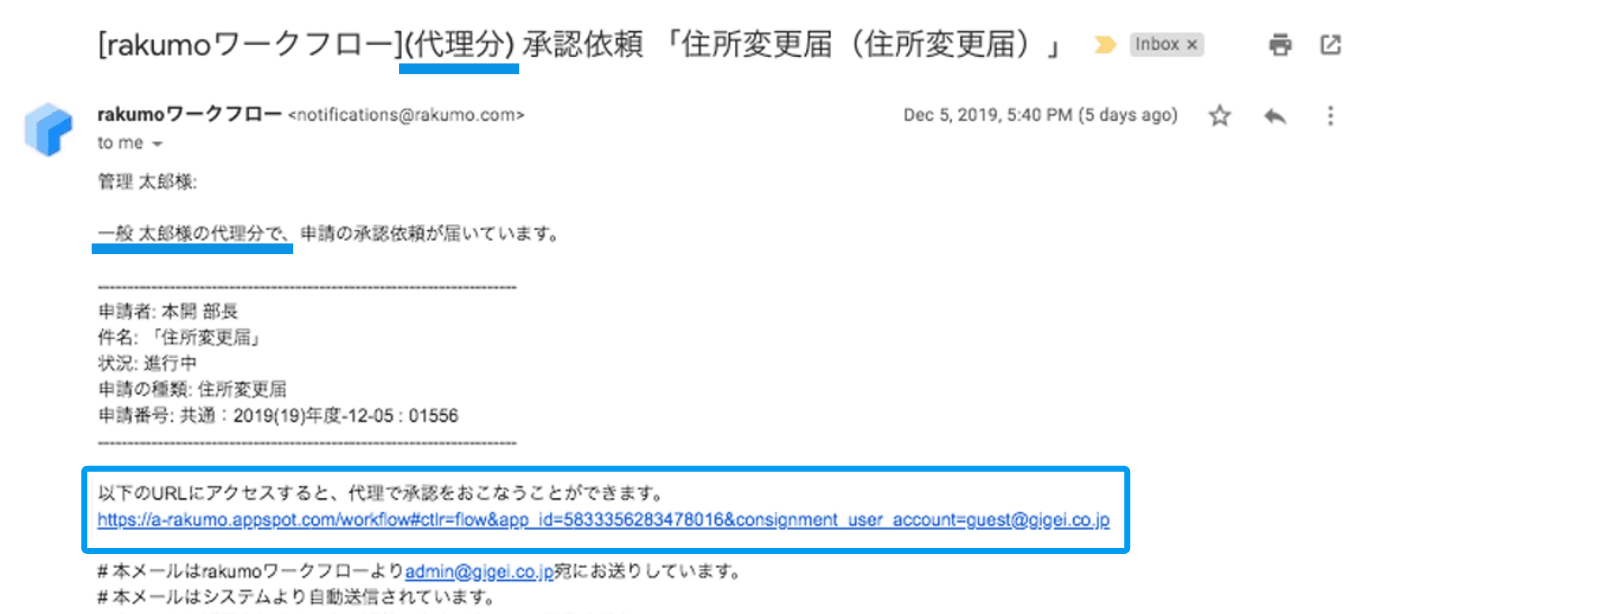 rakumo ワークフロー 代理承認のメール通知イメージ